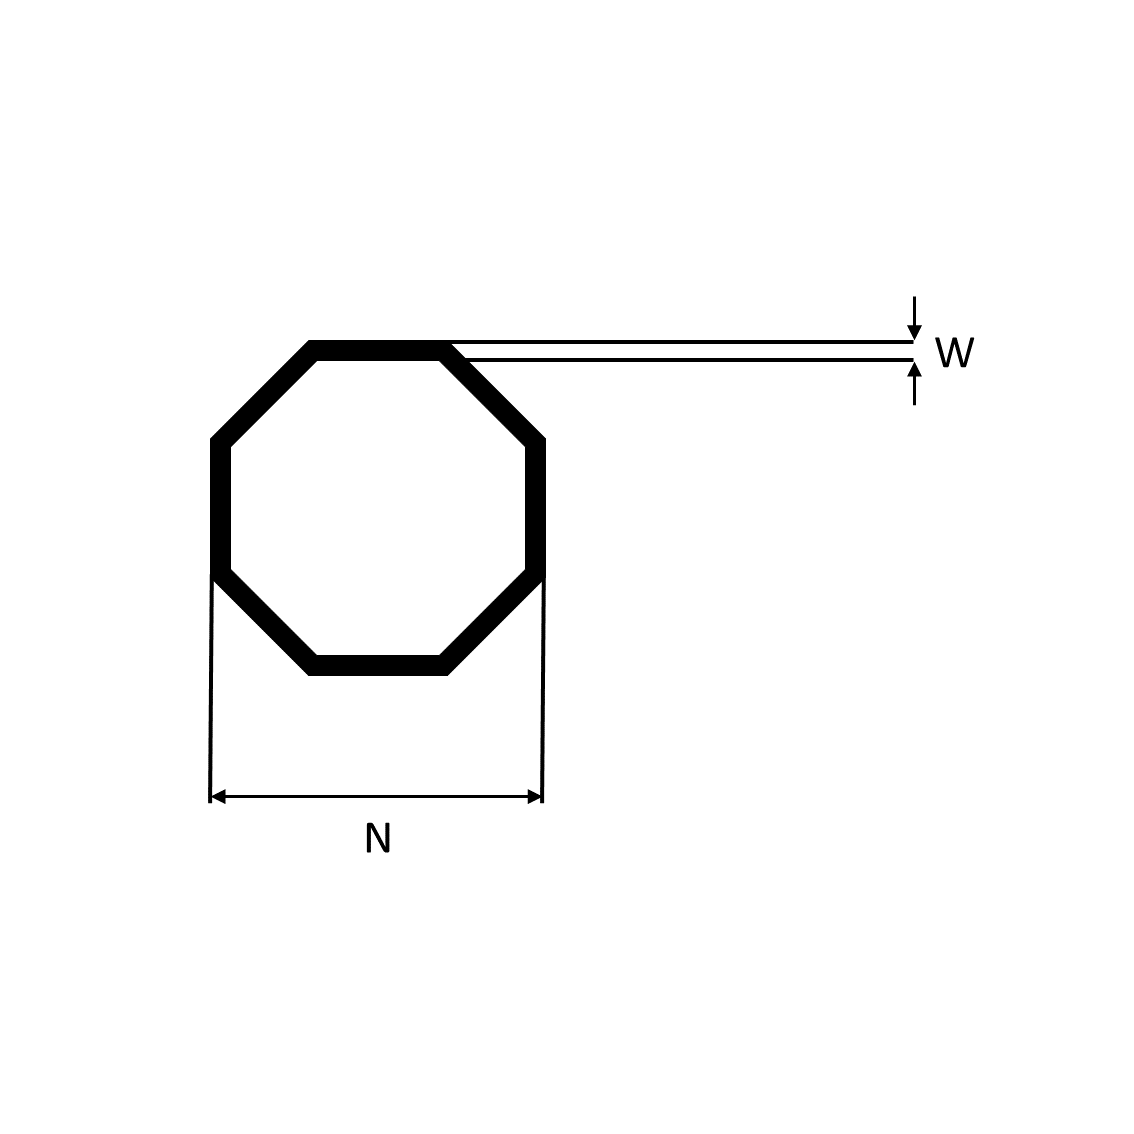 Octagonal tube - octagonal inside, Silver